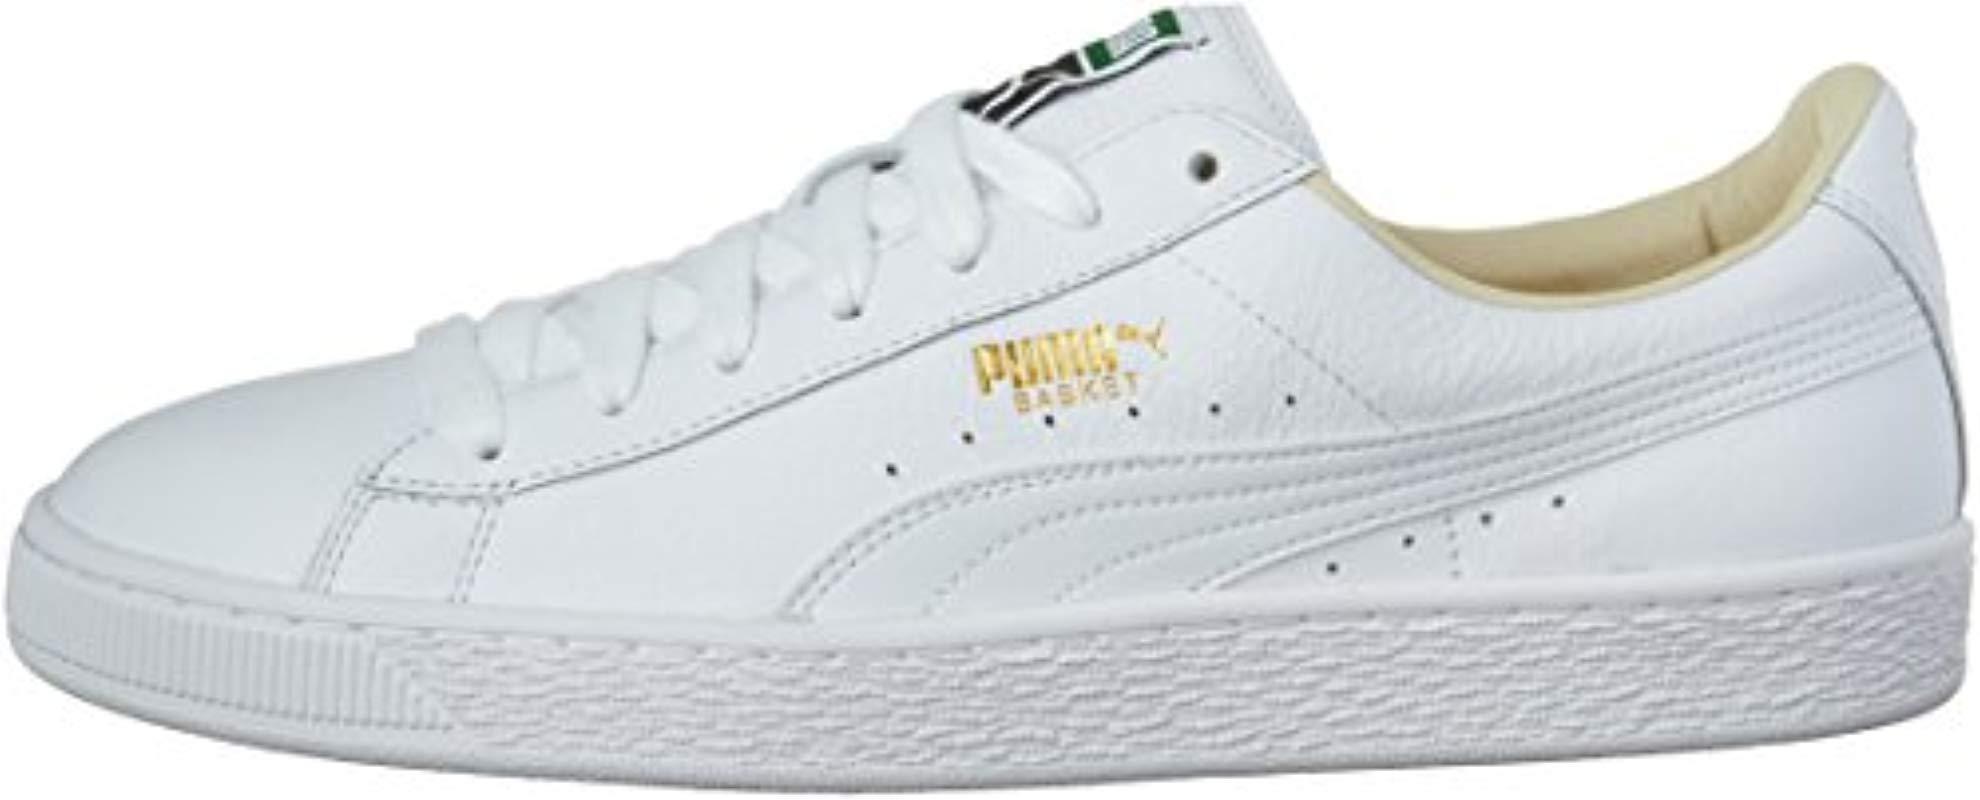 puma basket classic low top sneakers